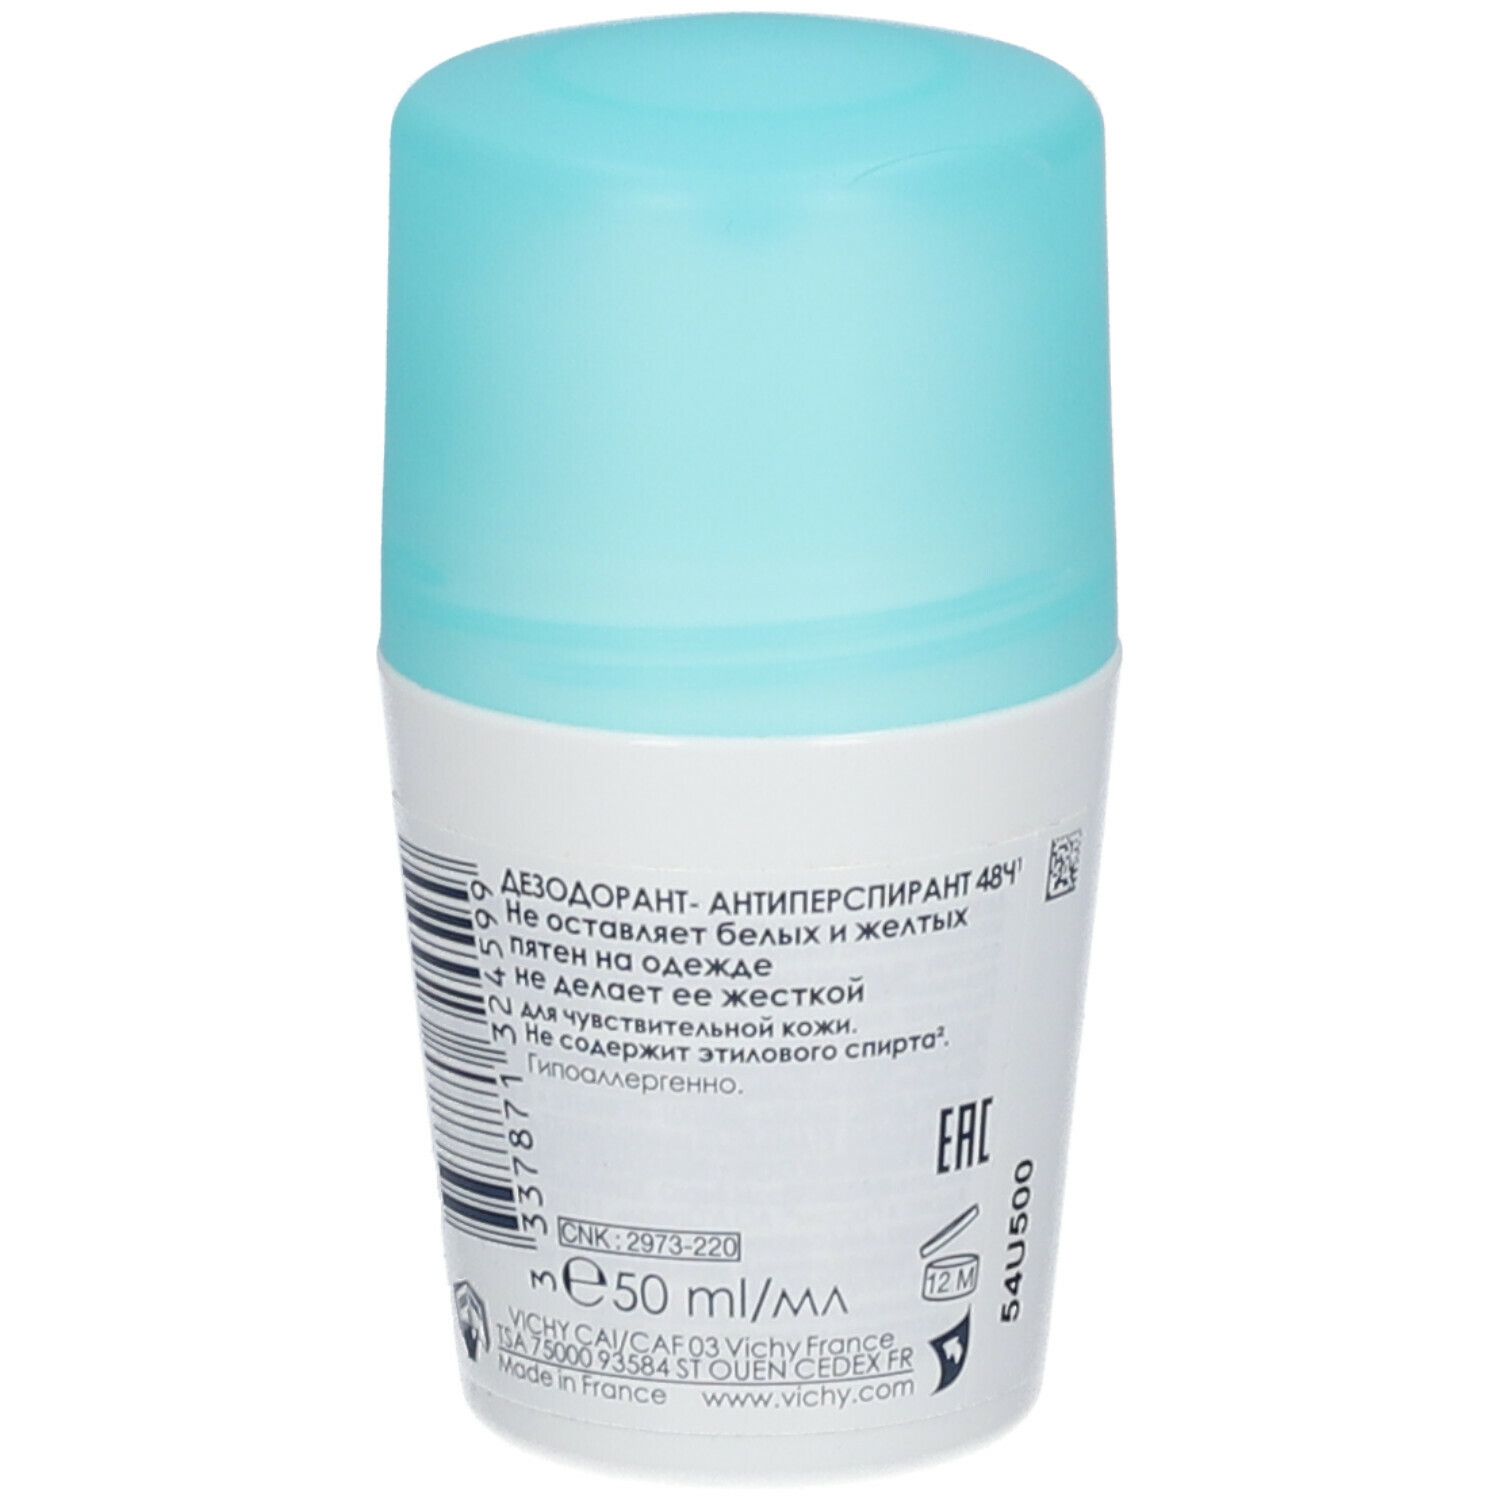 VICHY Antitranspirant Anti-Track-Deodorant